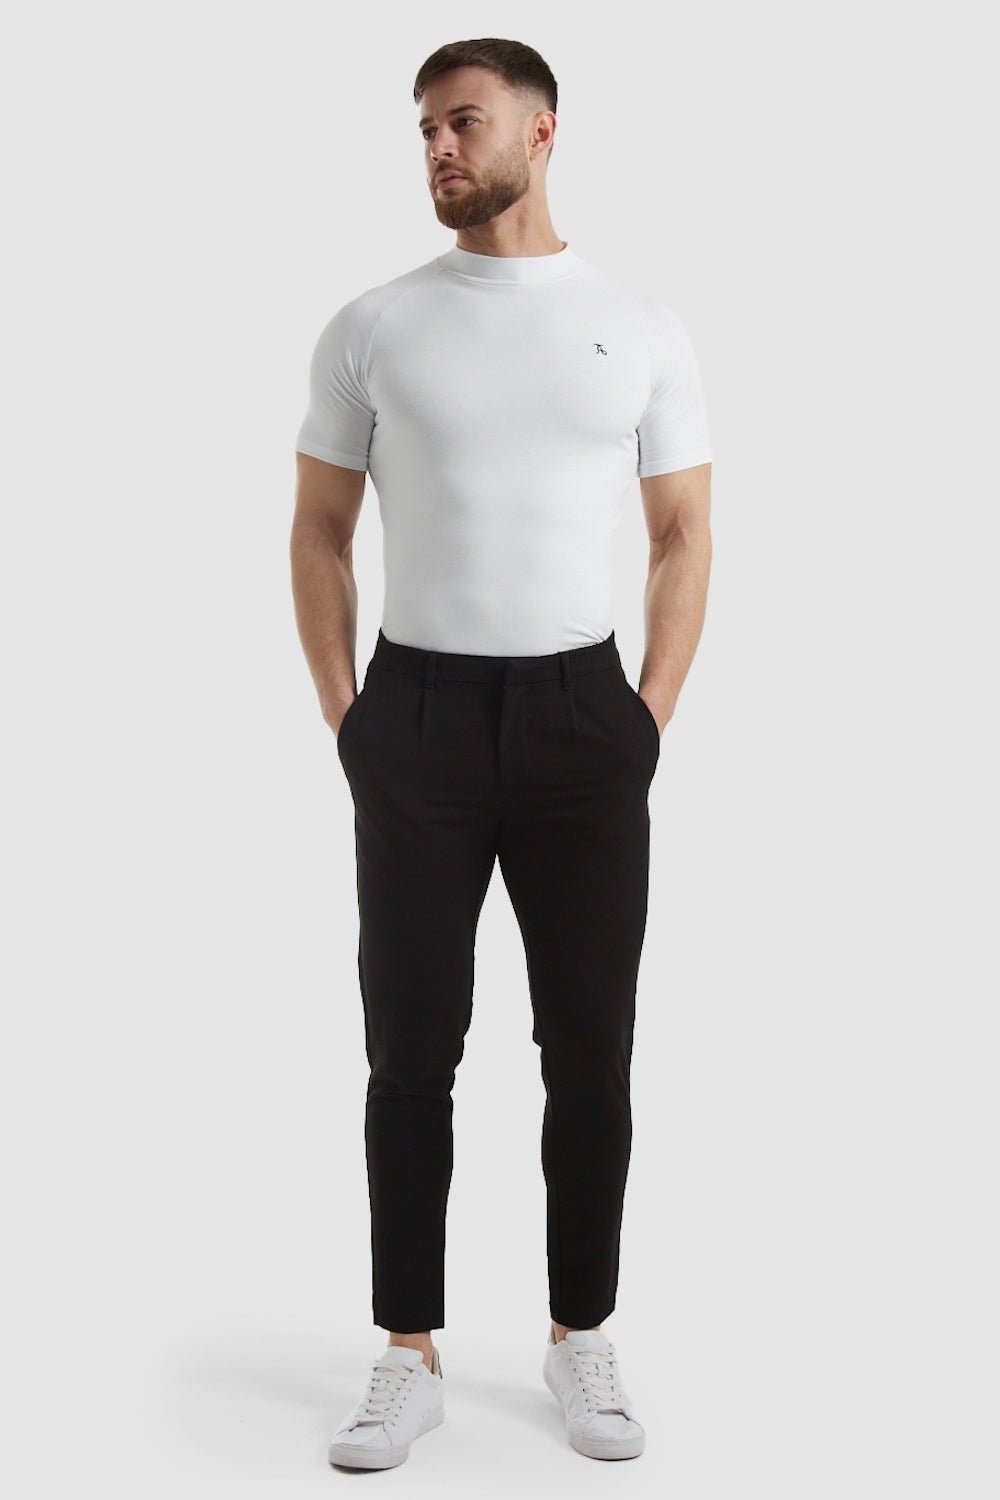 White Mandarin Collar Shirt + Grey Trousers – Rivesse.com